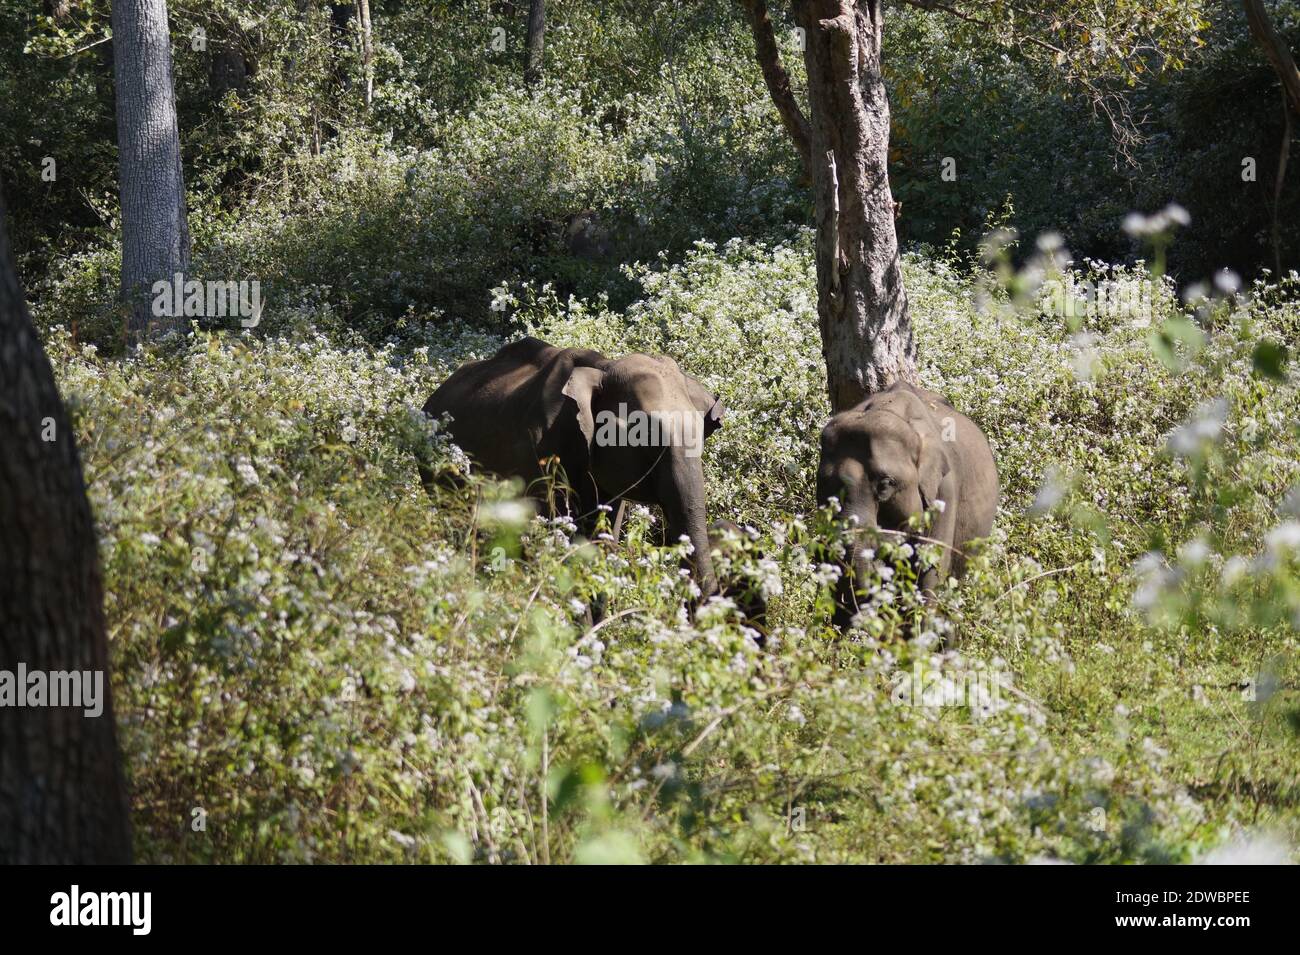 Elephants in wayanad wildlife santuary in wayanad, Kerala, India. Wayanad Wildlife Sanctuary is the second largest wildlife sanctuary in Kerala. Stock Photo